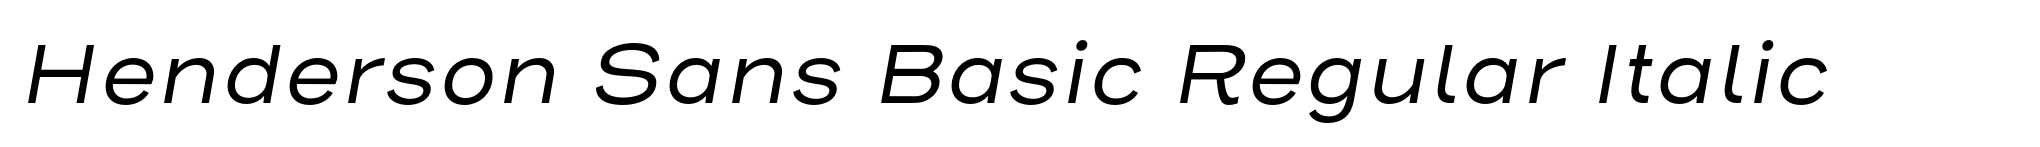 Henderson Sans Basic Regular Italic image